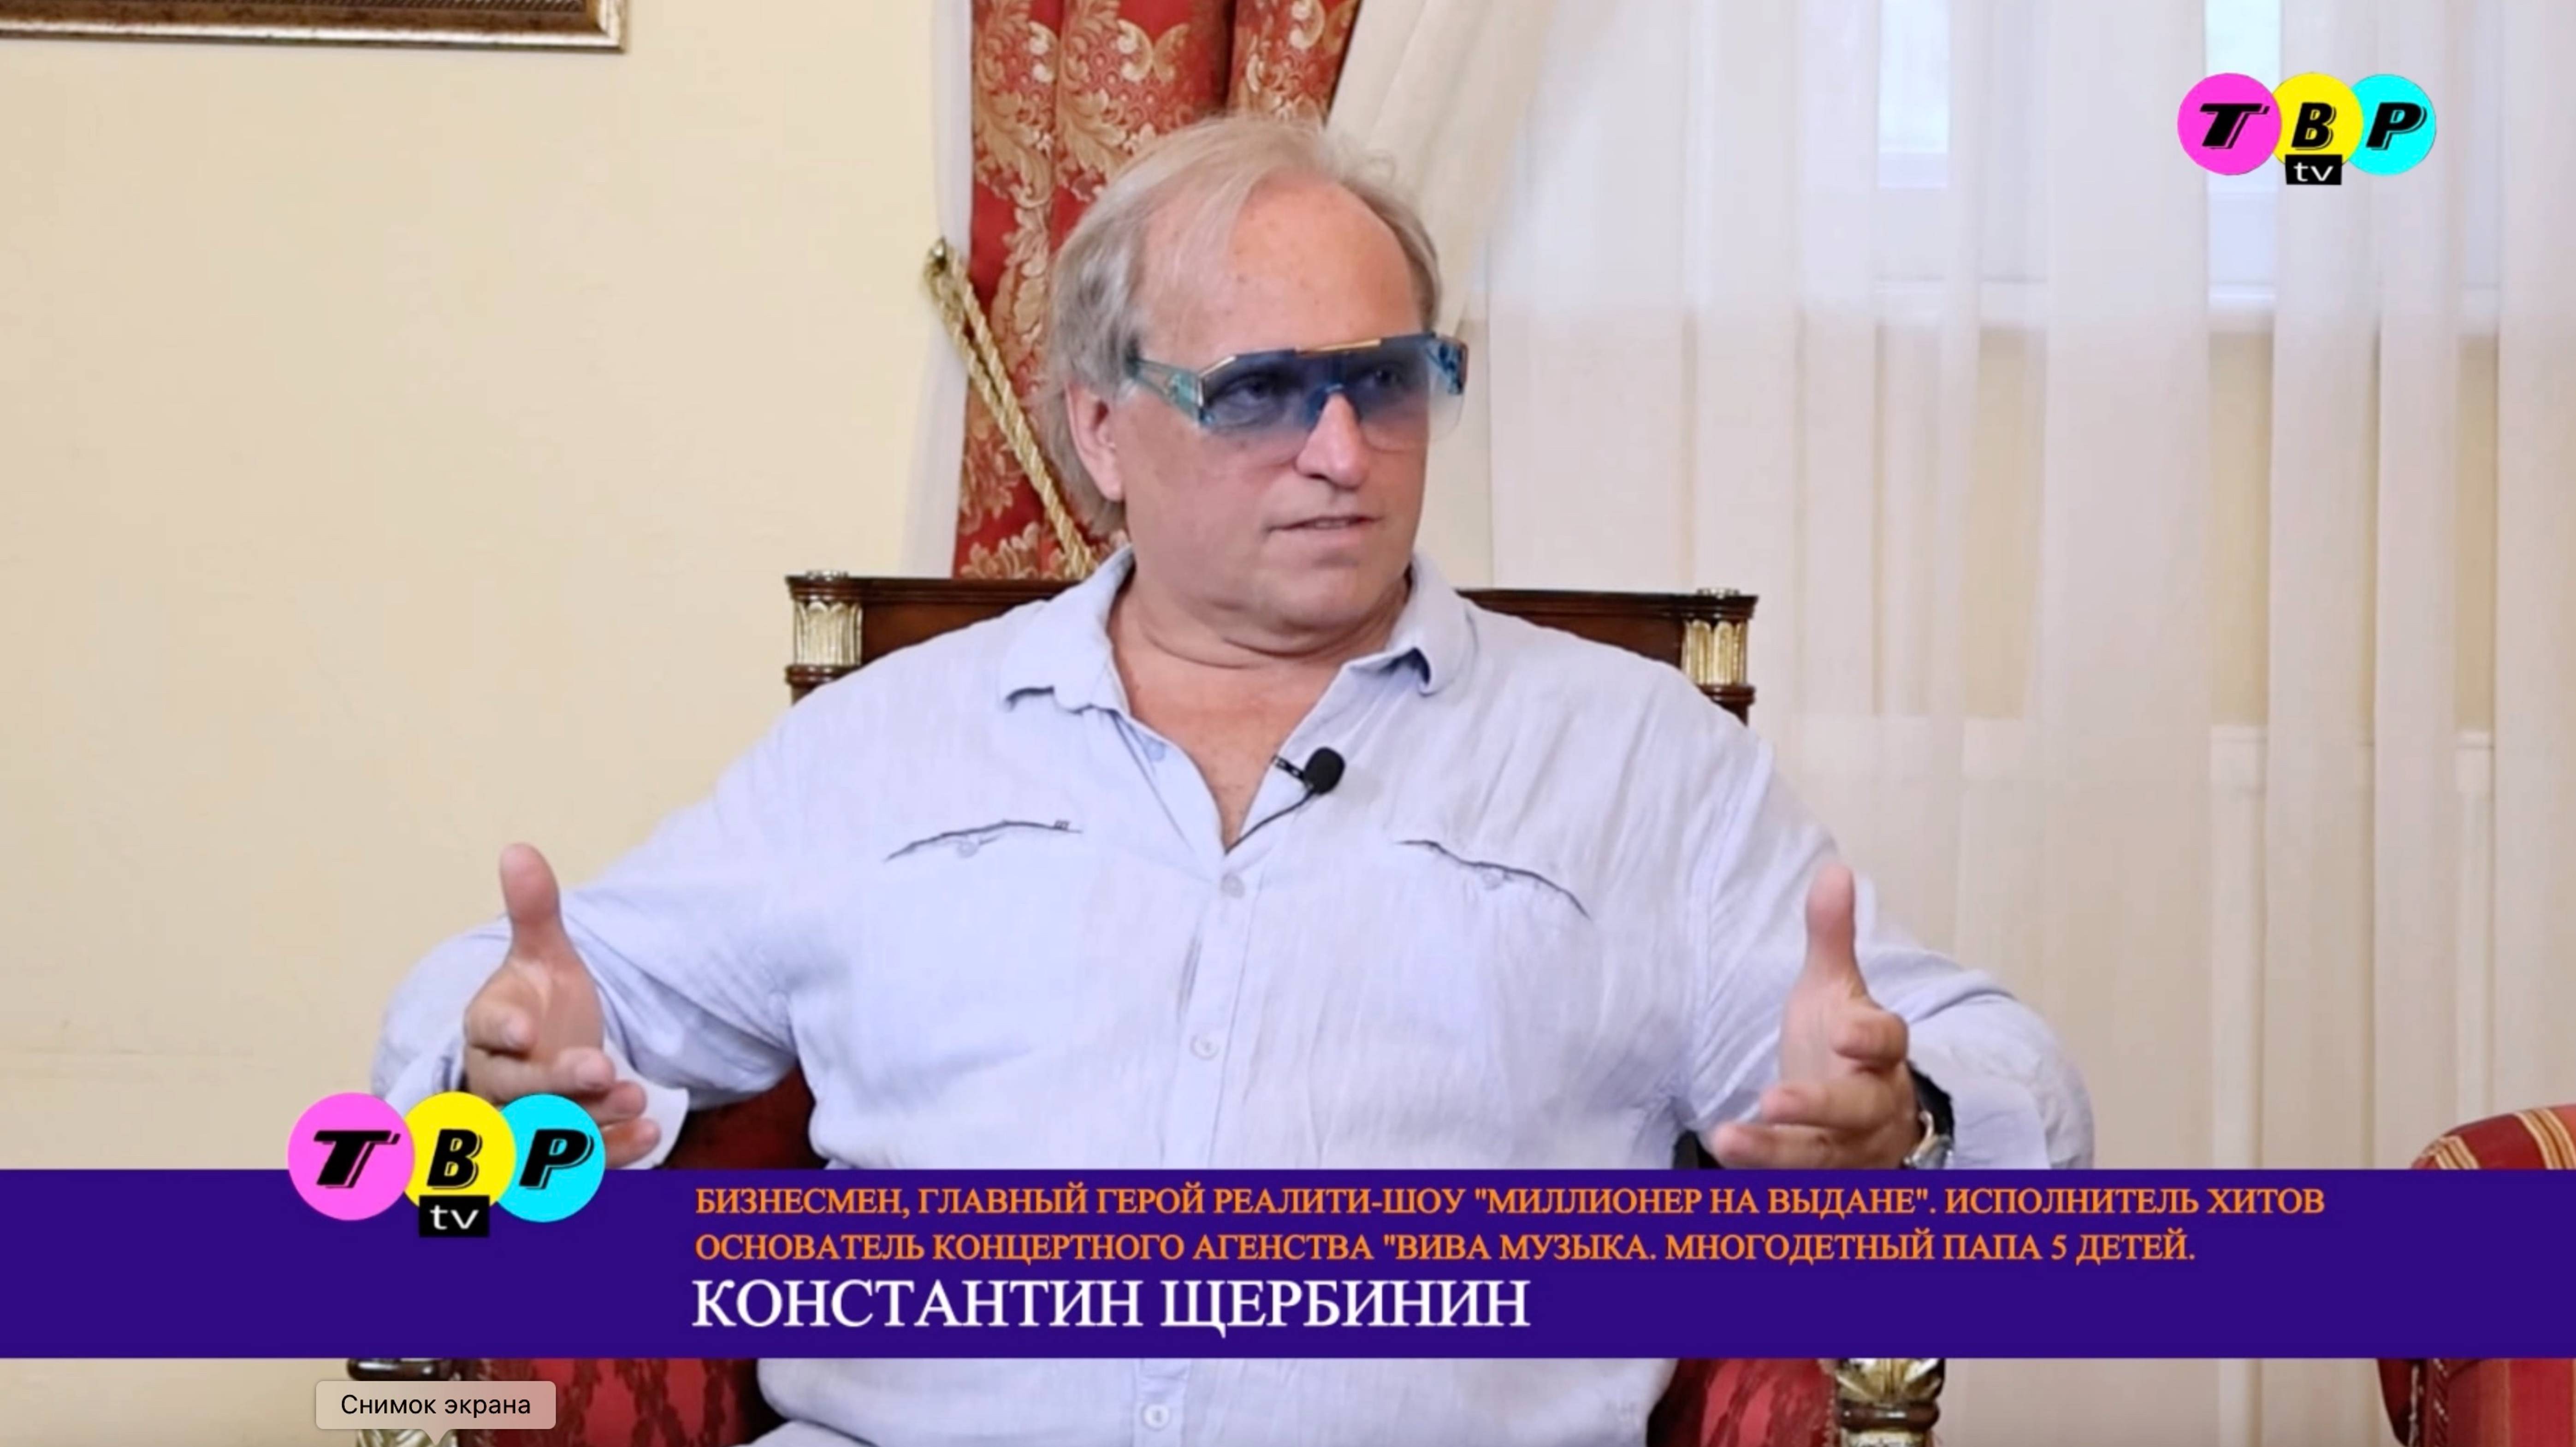 Константин Щербинин в программе "Vip Персона